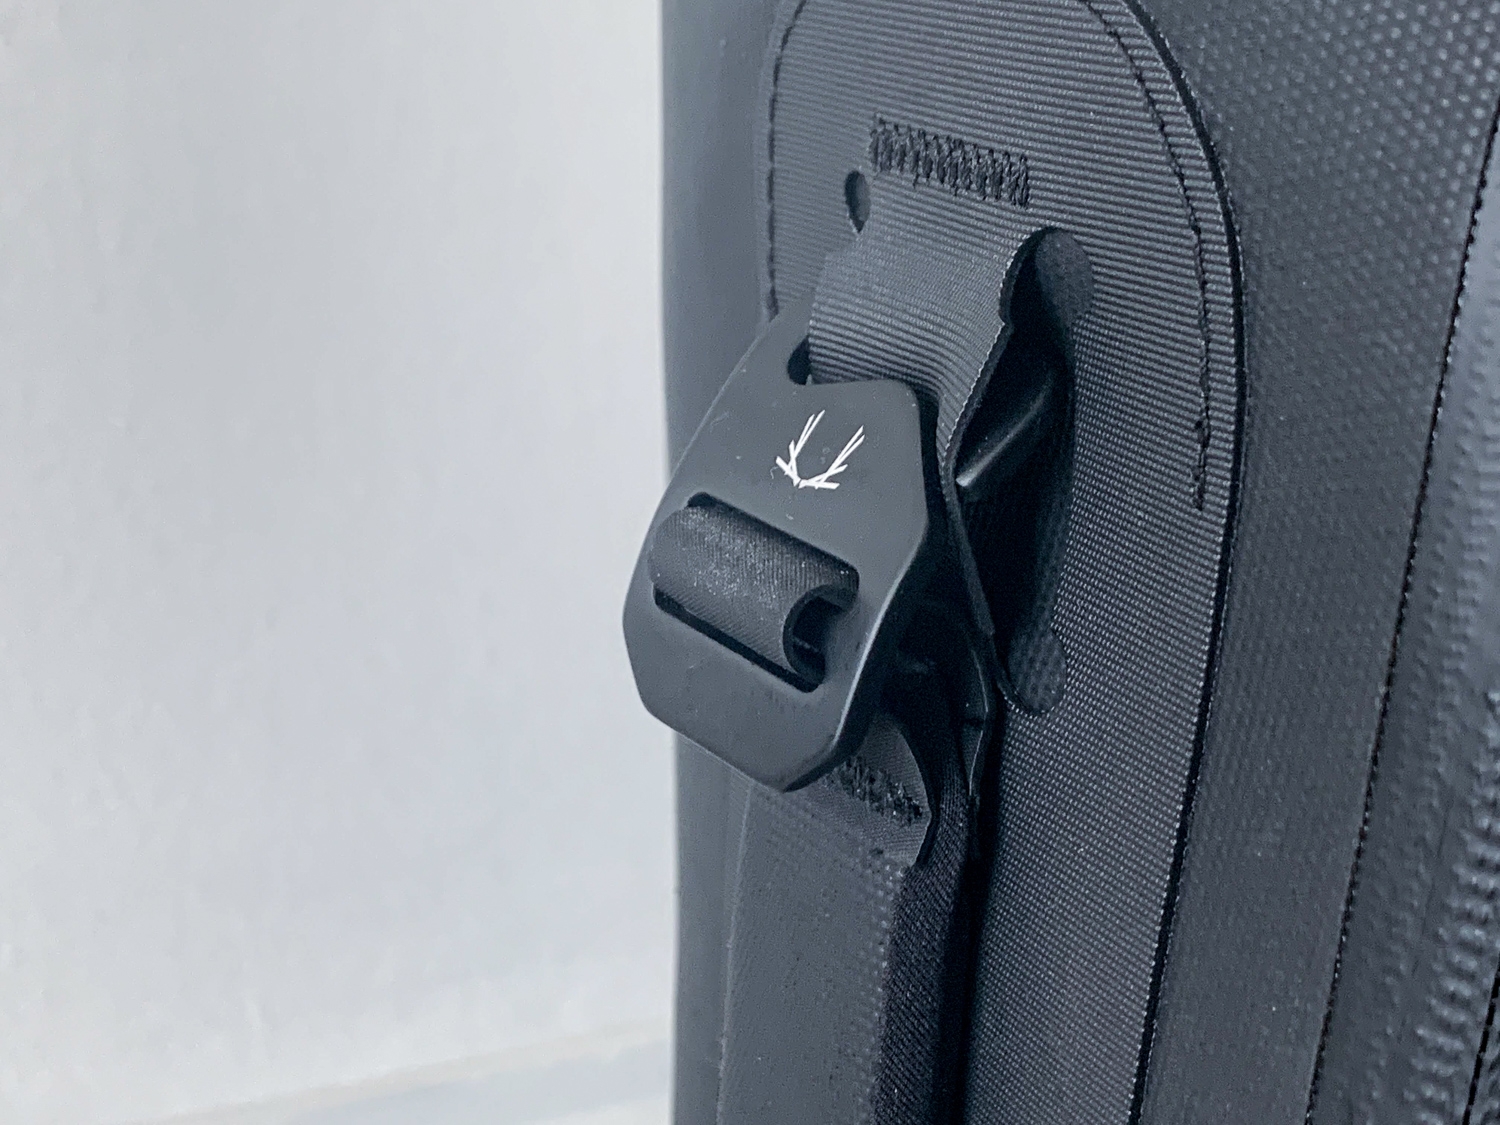 Minimal branding completes the look of this black minimalist backpack.